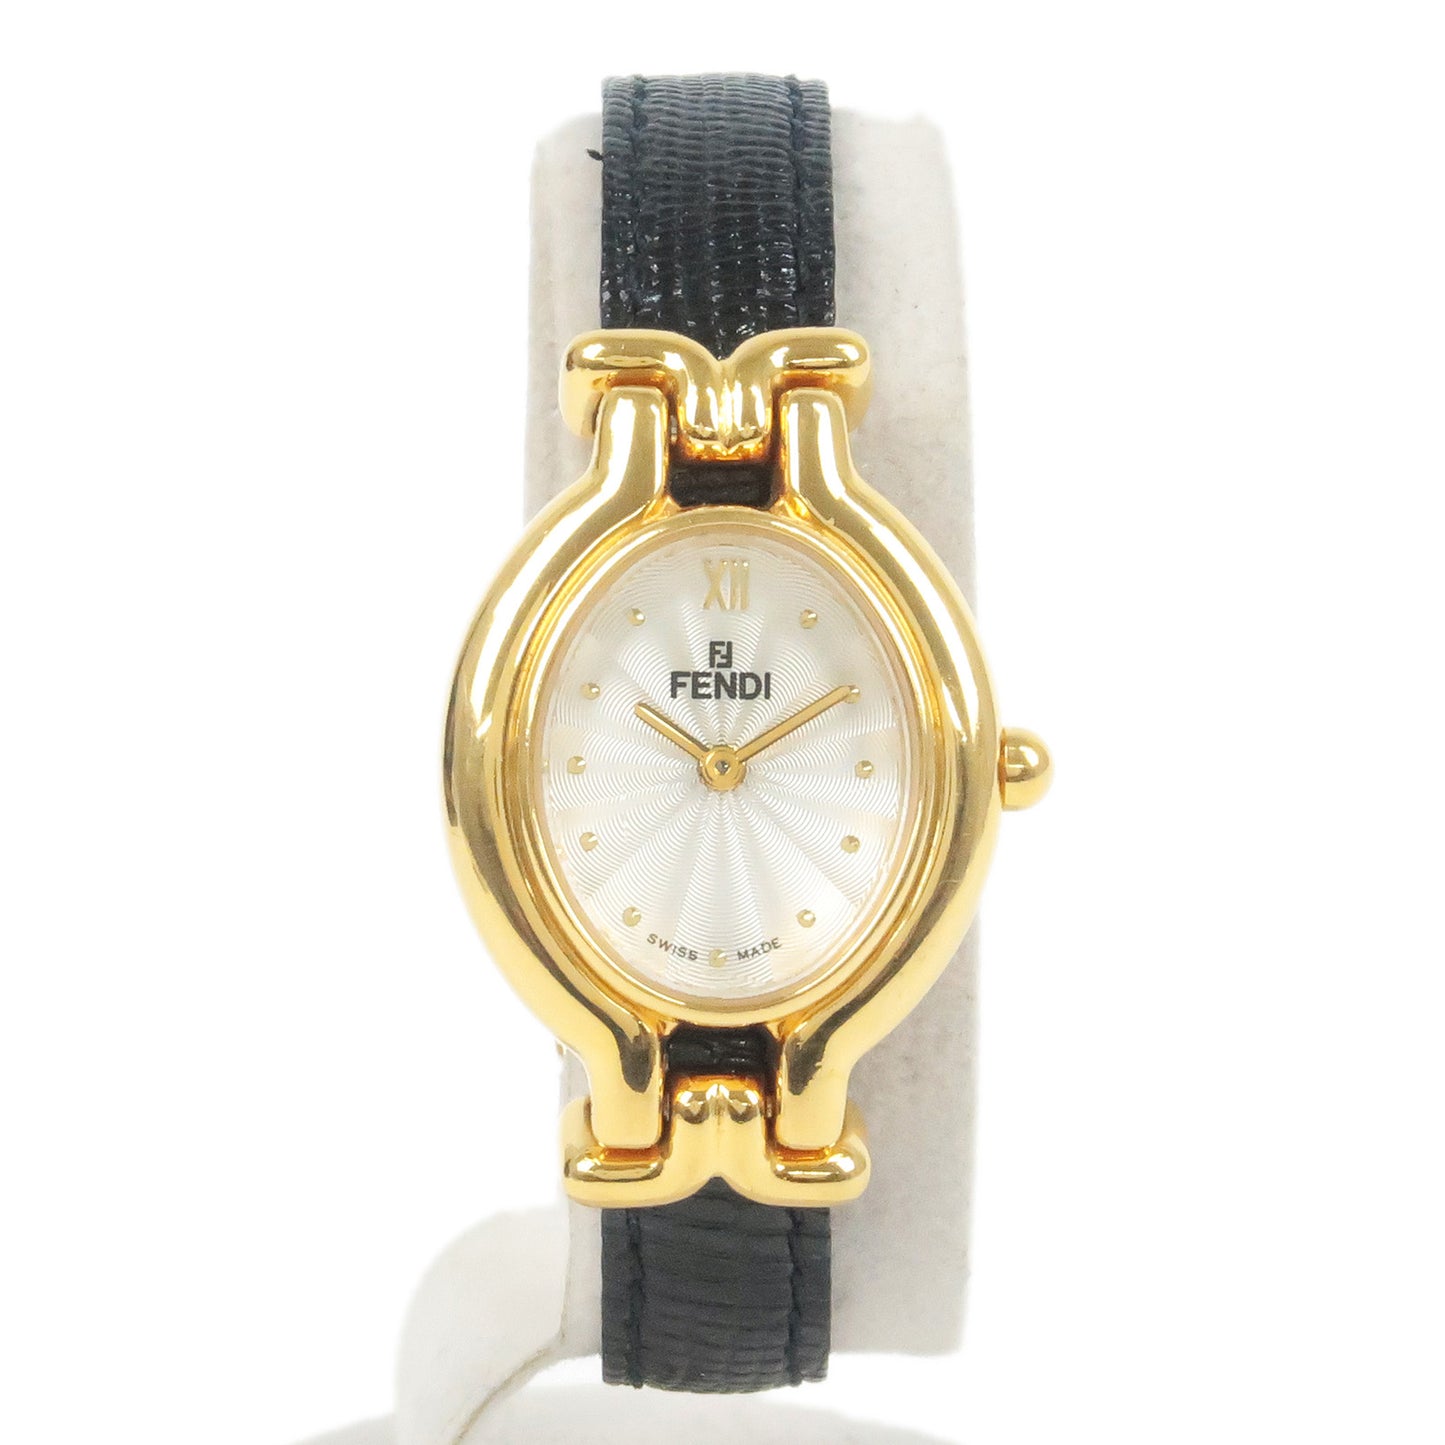 FENDI-Ladies-Changeable-Leather-Belt-Wrist-Watch-Quartz-640L